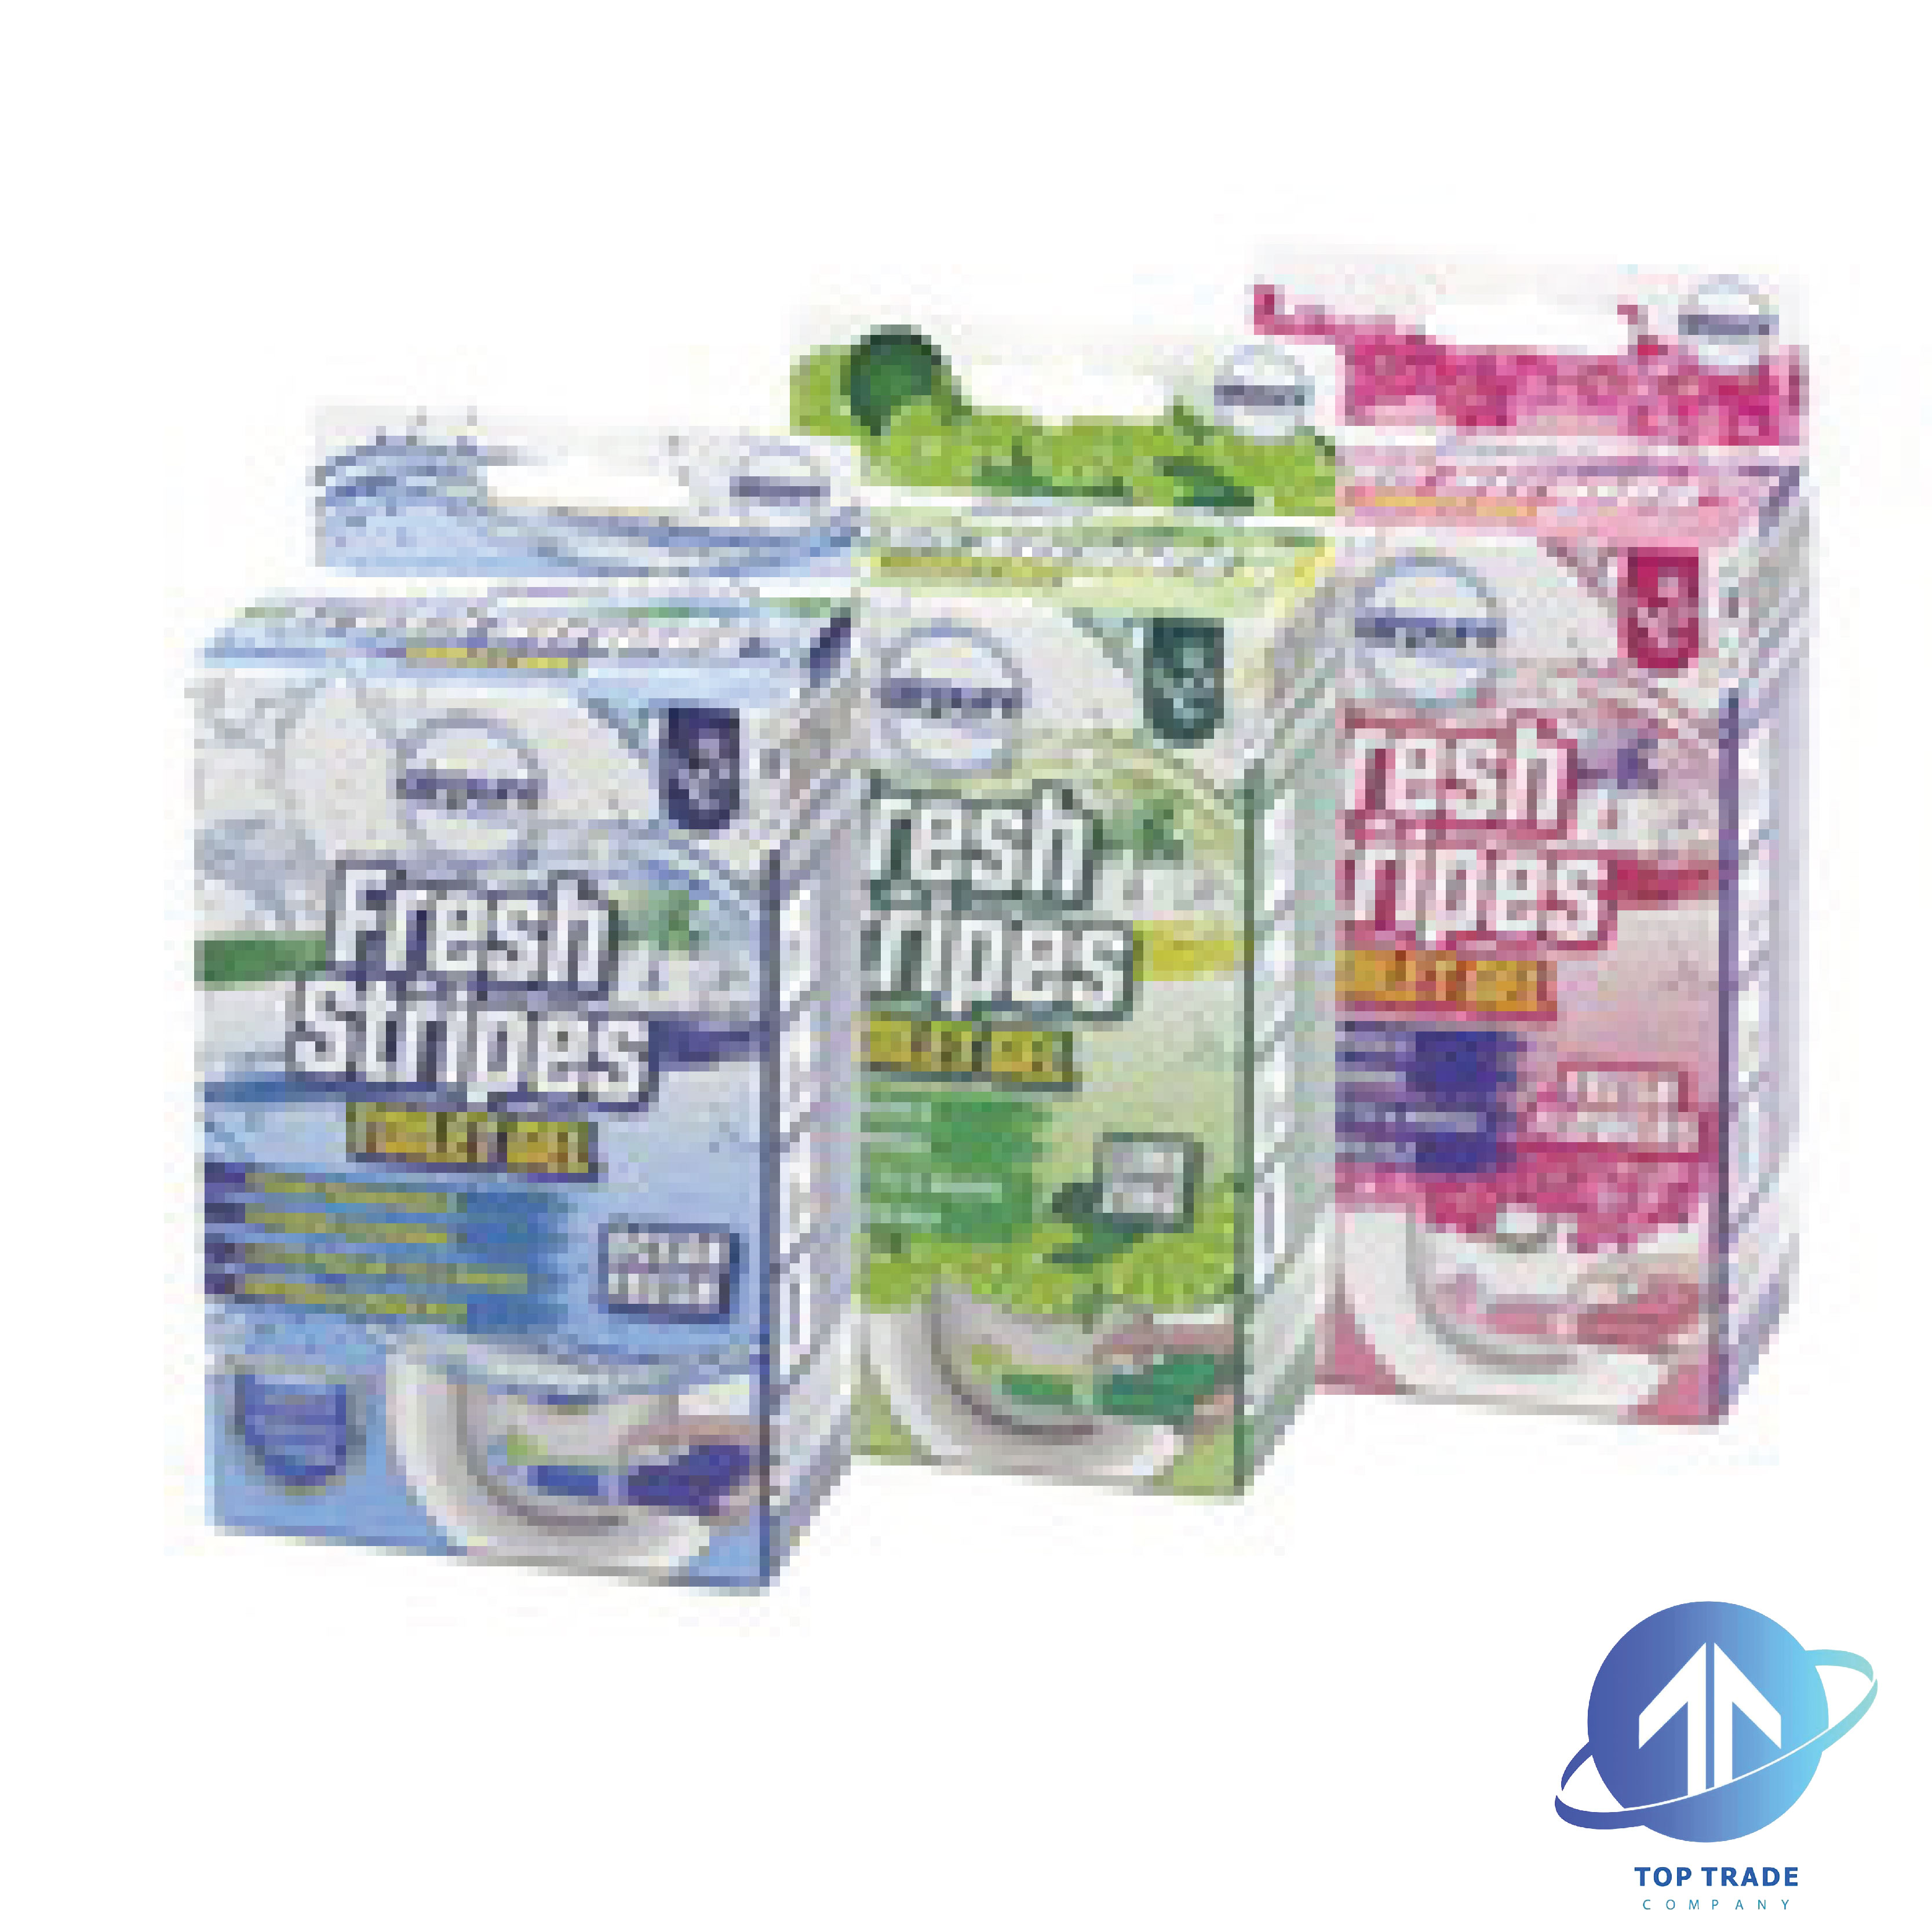 Airpure Fresh Stripes toilet gel - 3 fragrance mix